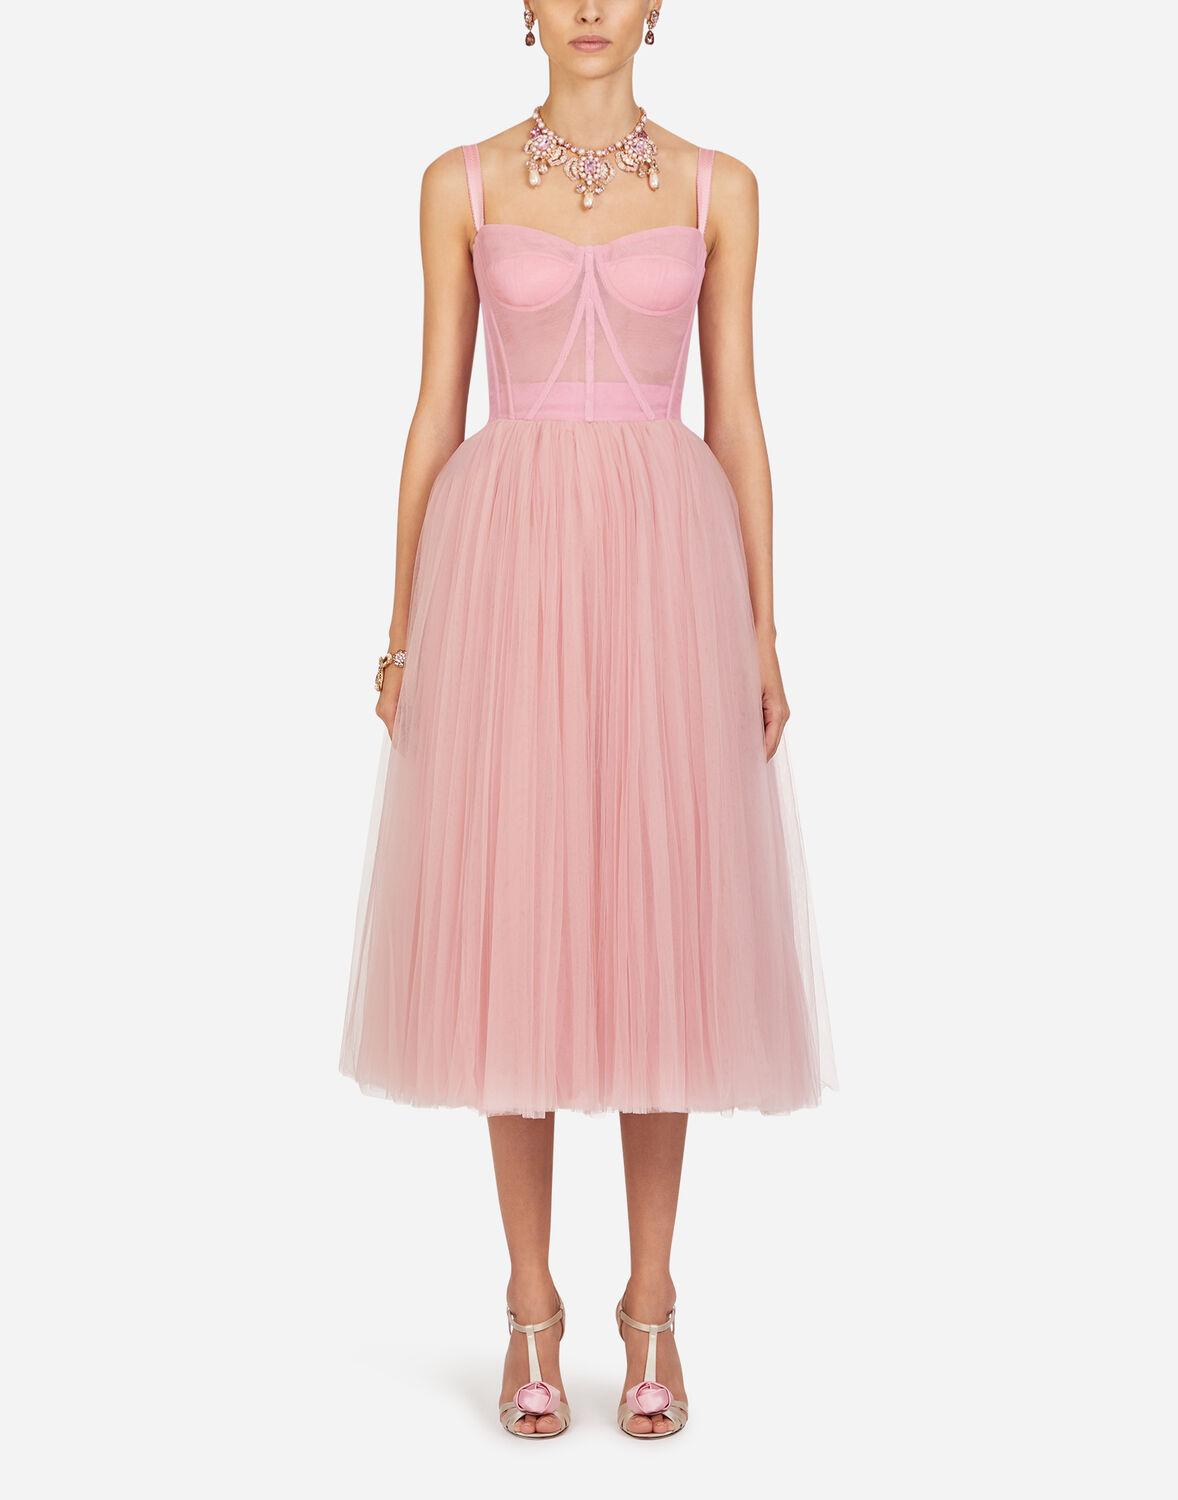 Dolce ☀ Gabbana Tulle Midi Dress in ...